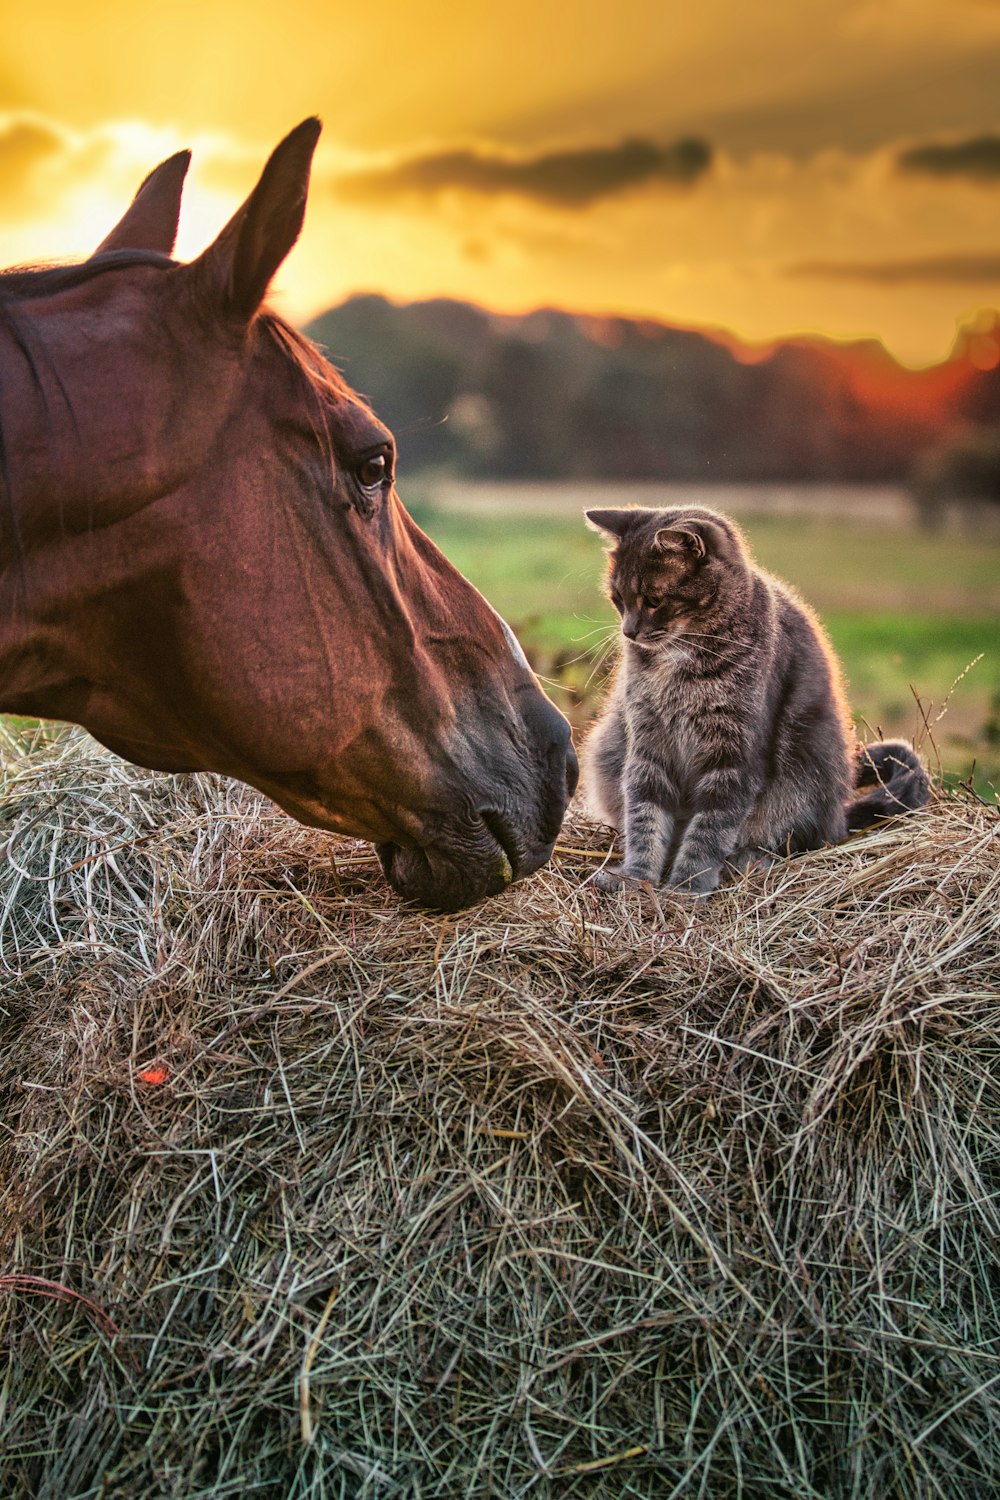 Un gato sentado encima de una pila de heno junto a un caballo